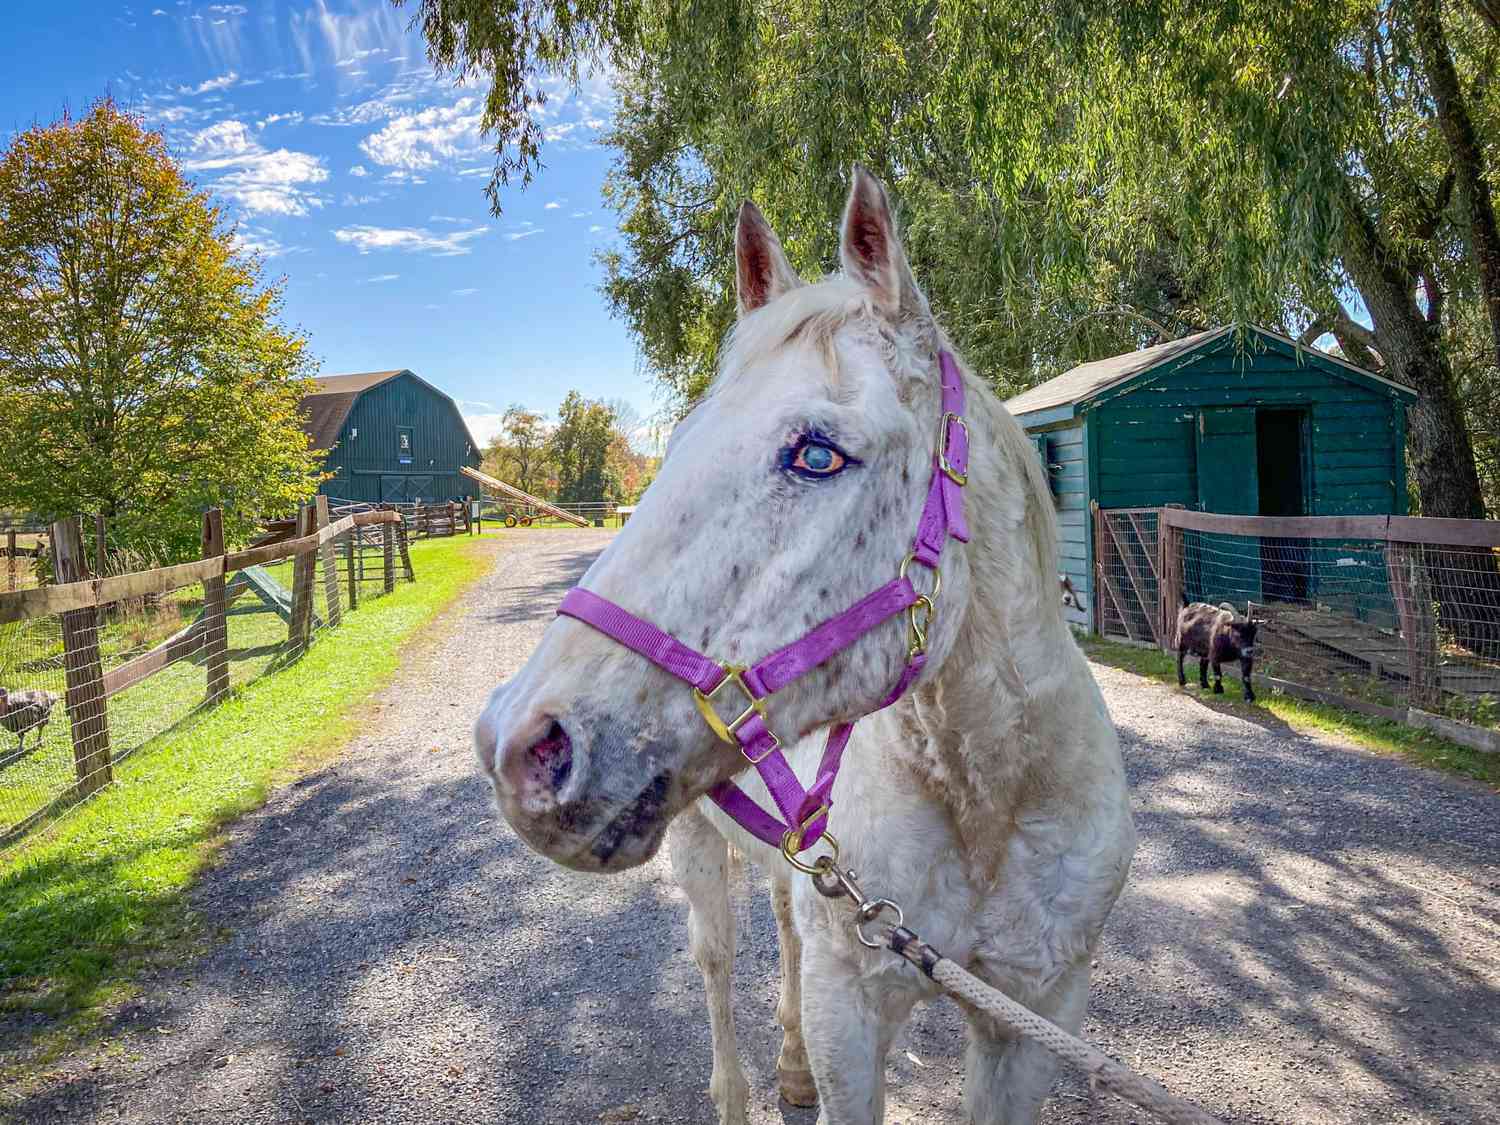 Blind horse farm animal rescue